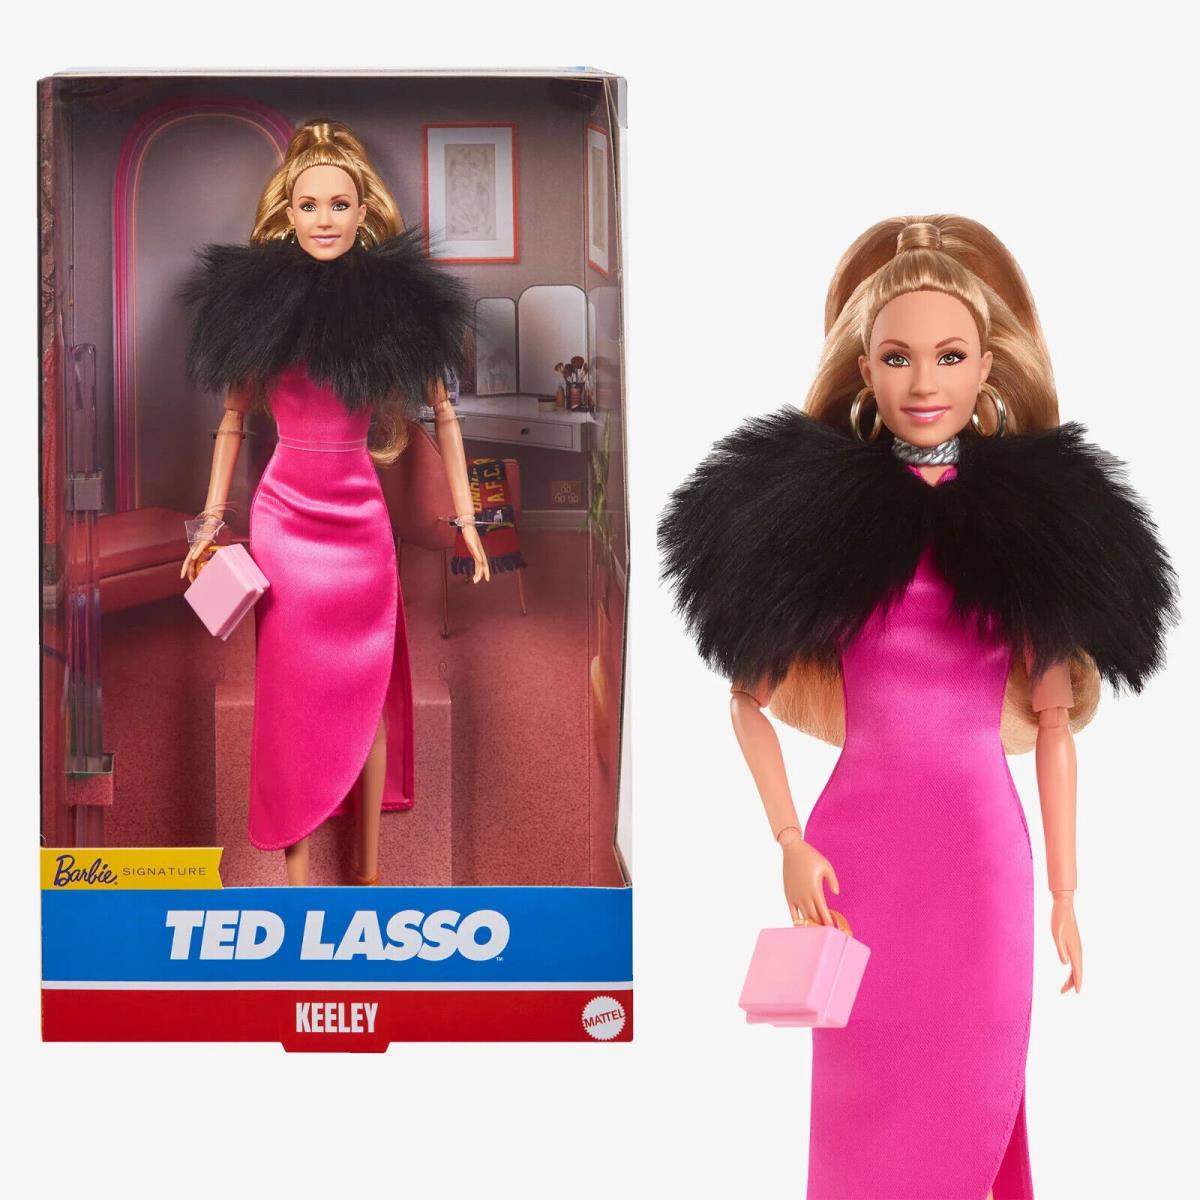 Mattel Creations Barbie Signature Fashion Doll Keeley Jones Ted Lasso